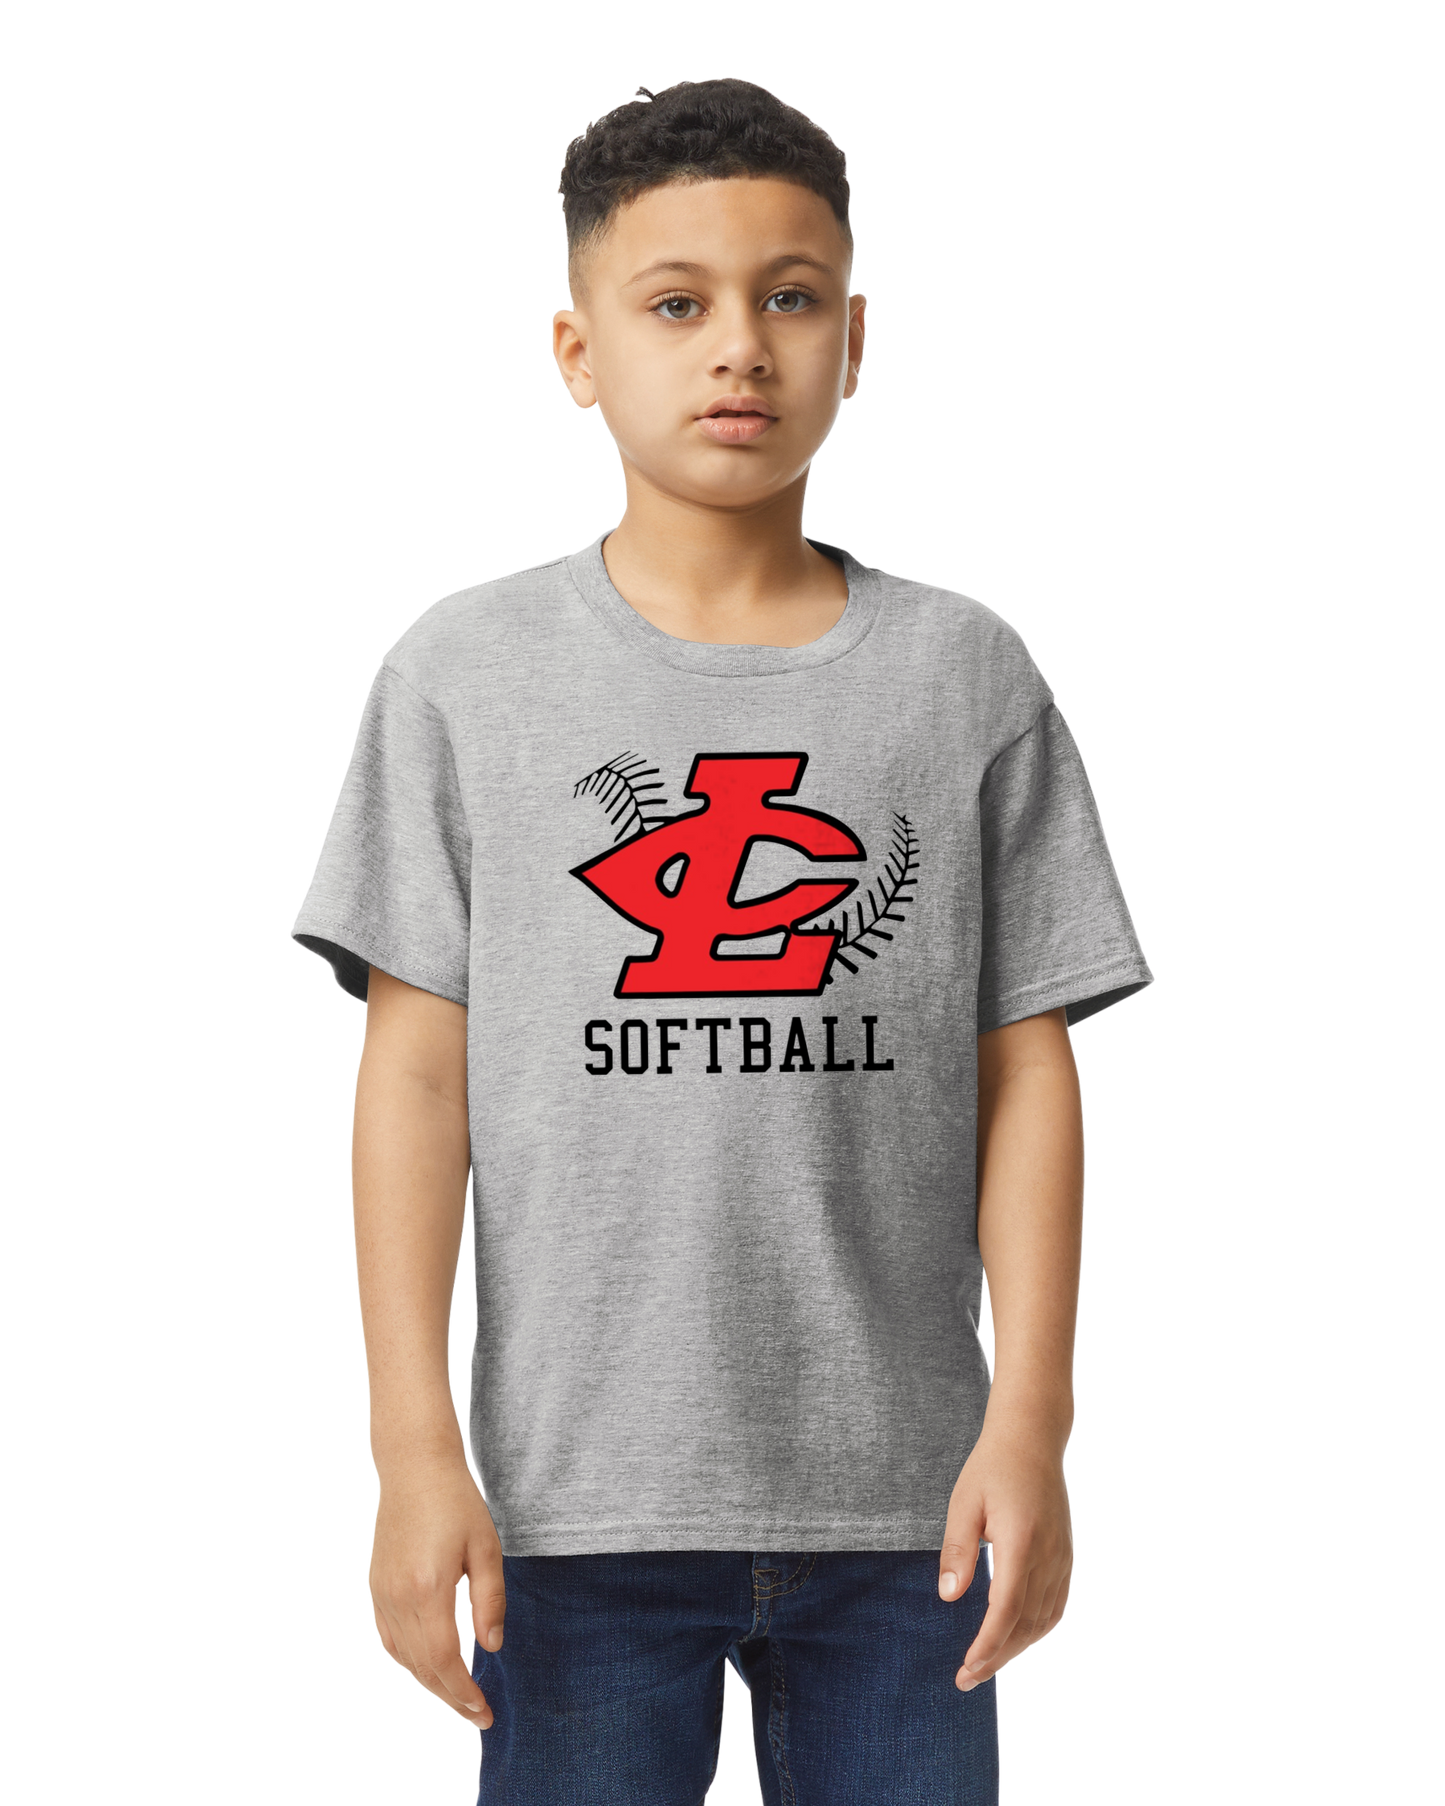 CLLL Softball - Youth Gildan Softstyle tshirt - GRAY